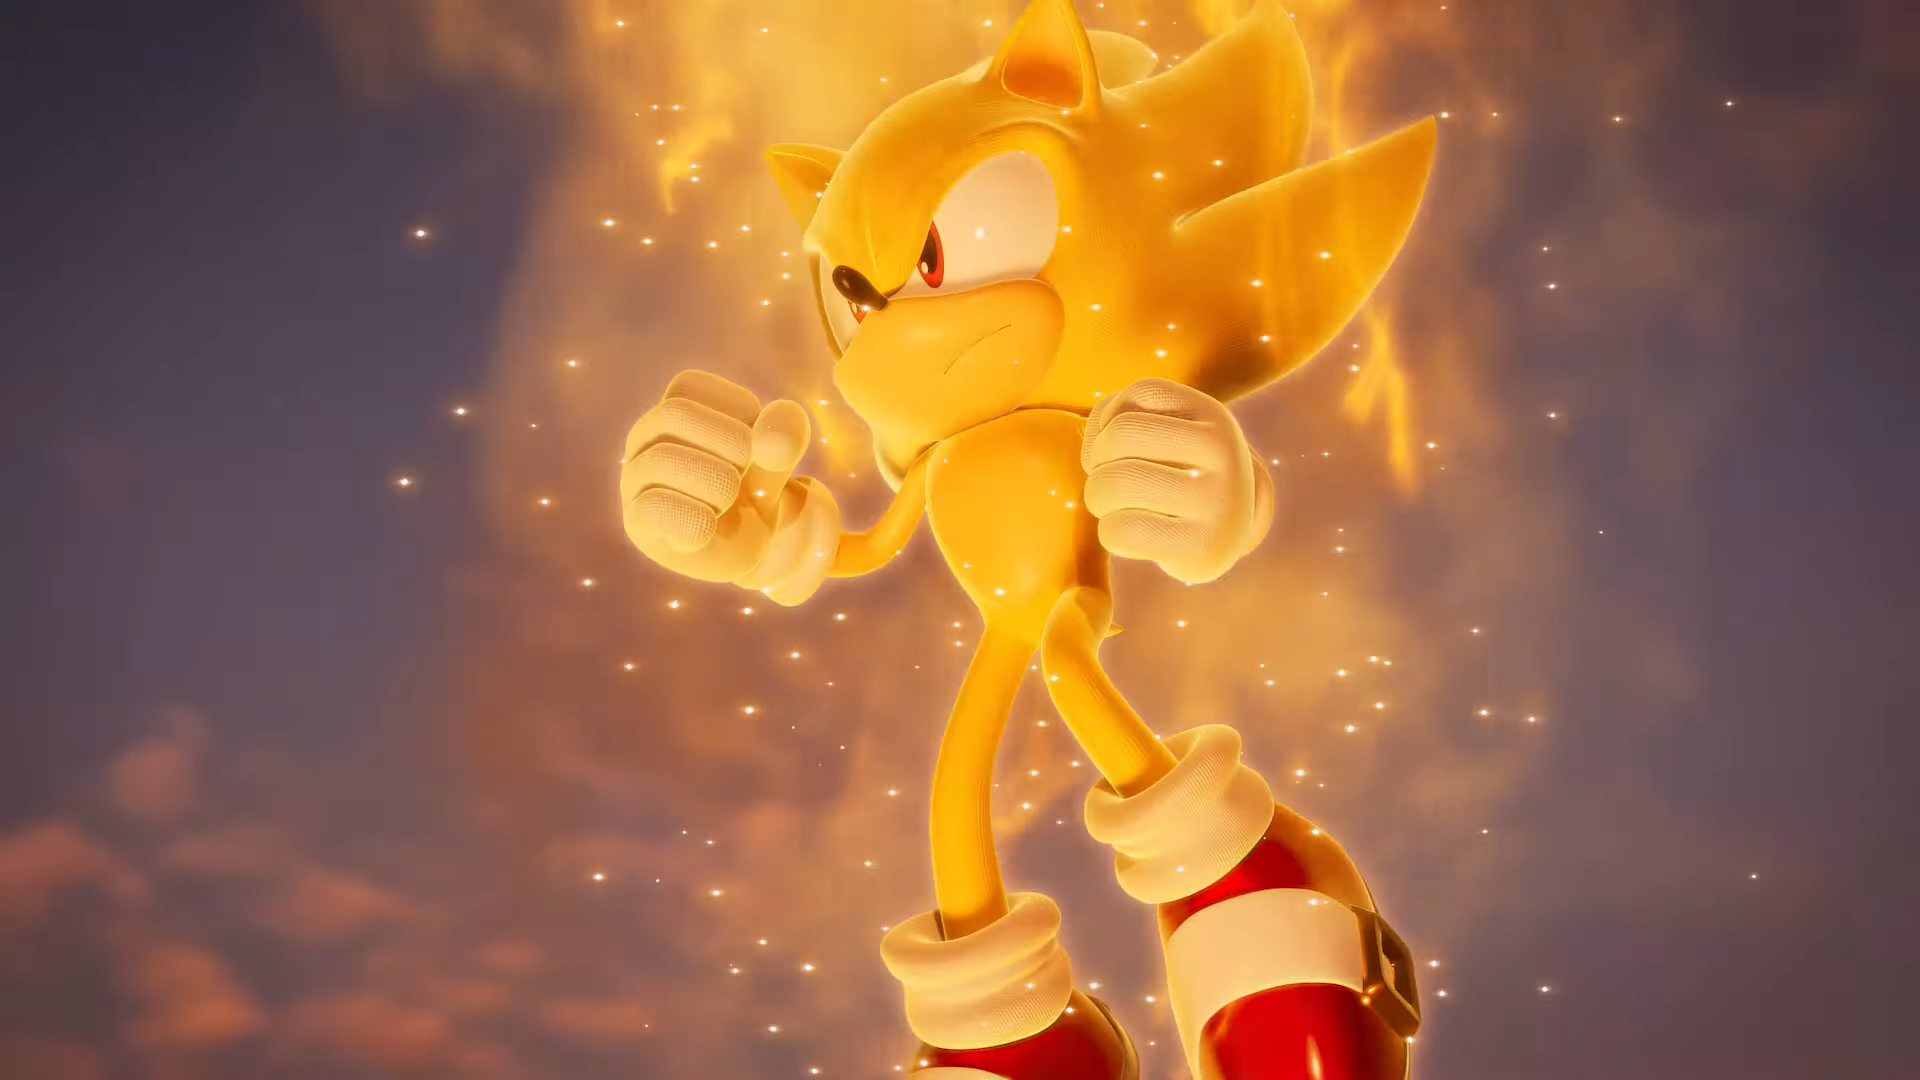 Sonic Frontiers – The Final Horizon Update Receives Sleek Animated Trailer